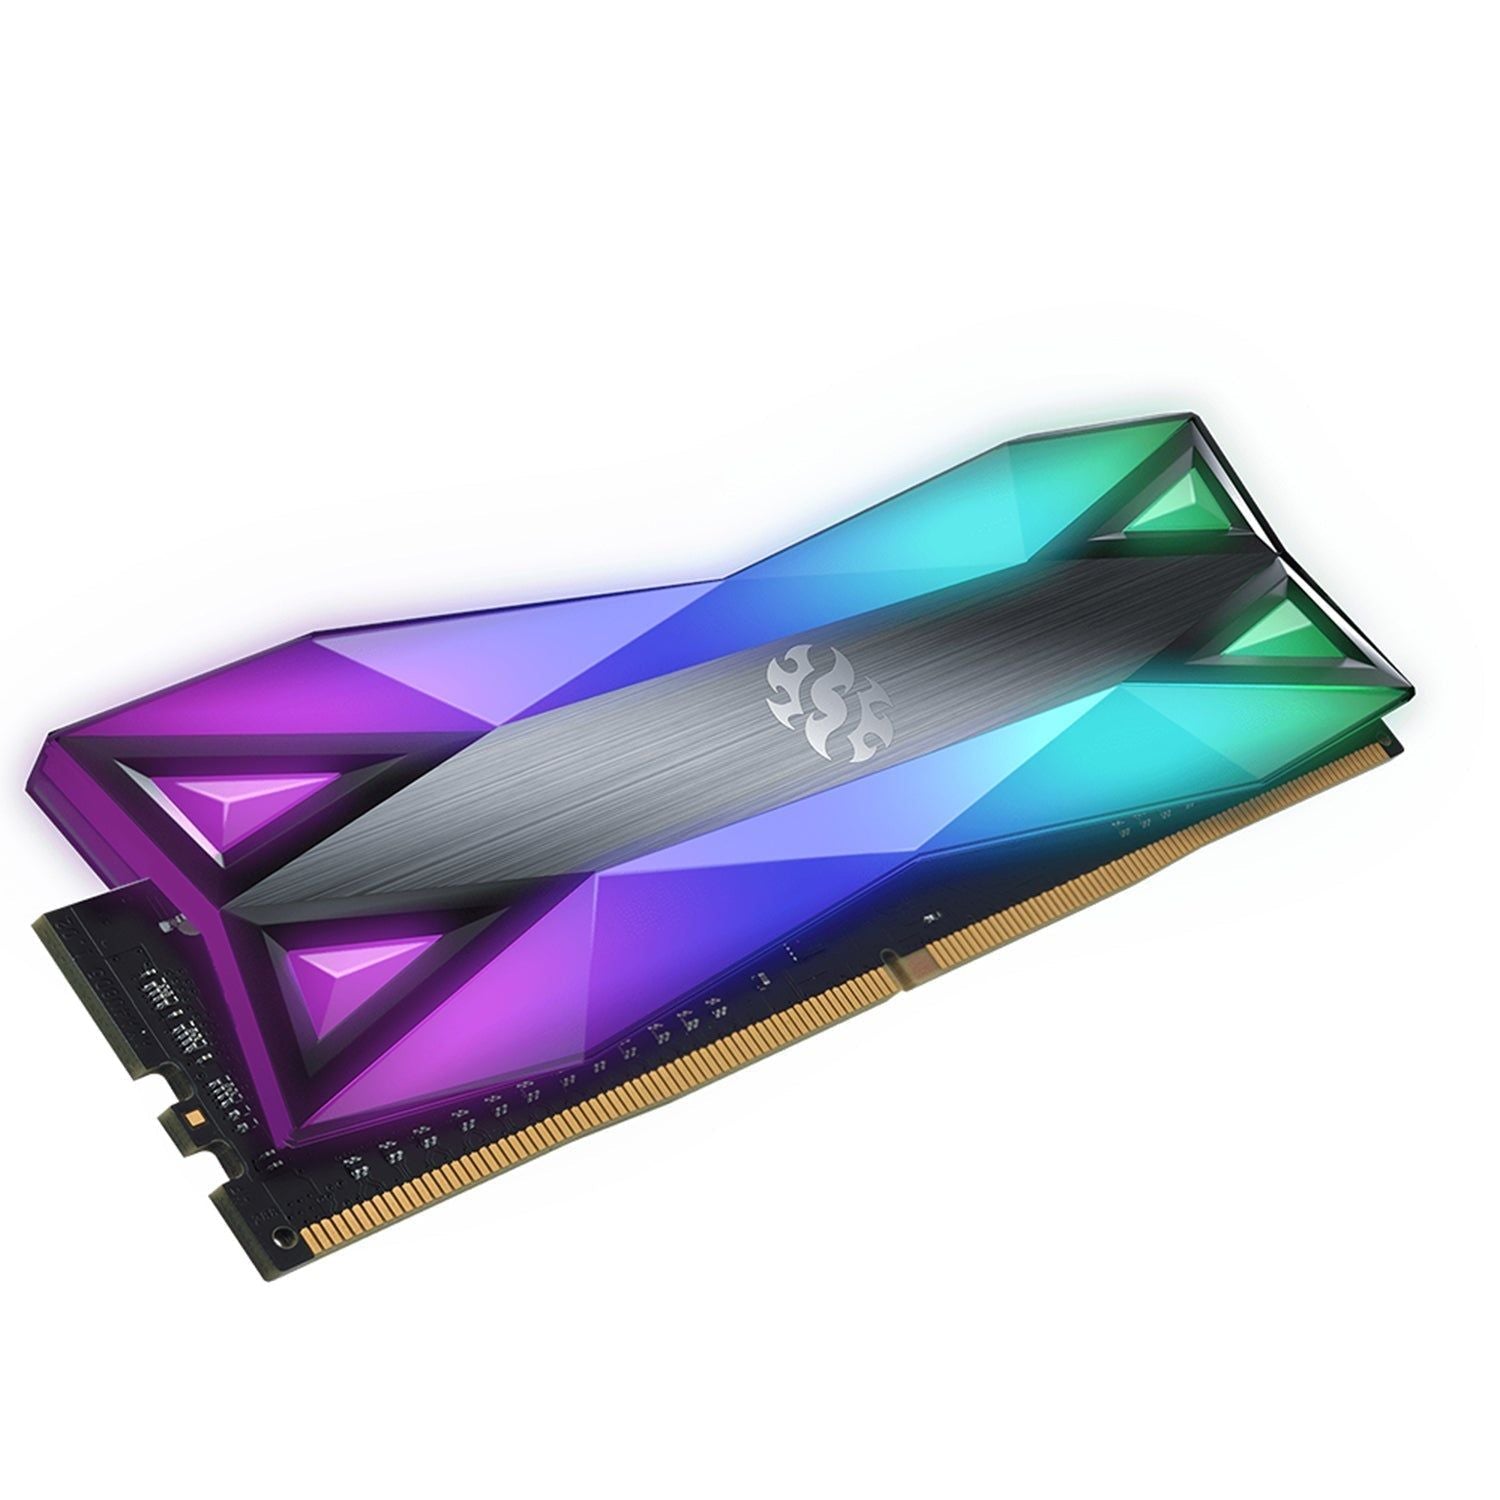 XPG Spectrix D60G 8gb RAM DDR4 - OVERCLOCK Computer